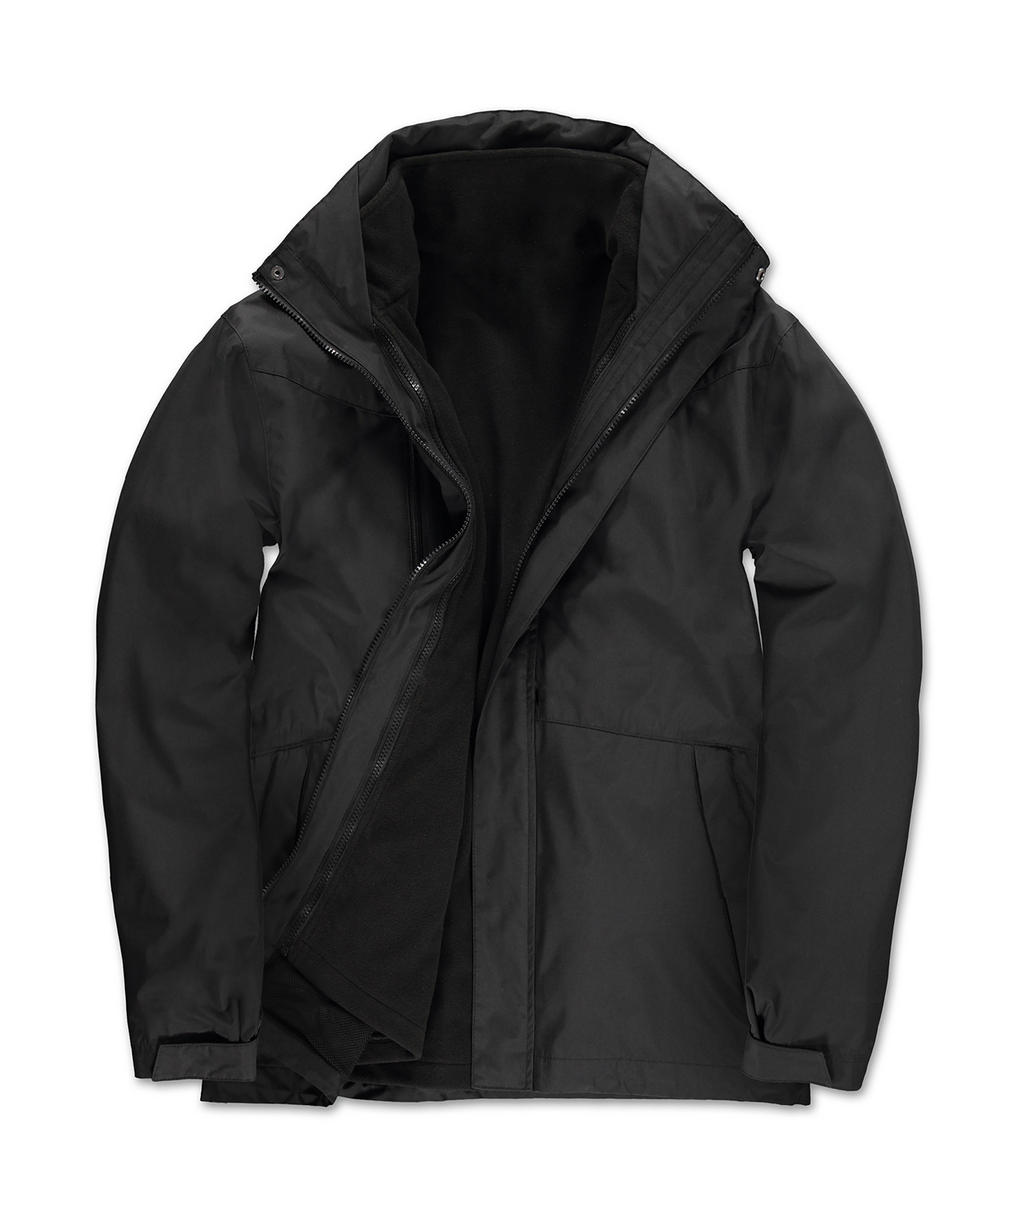  Corporate 3-in-1 Jacket in Farbe Black